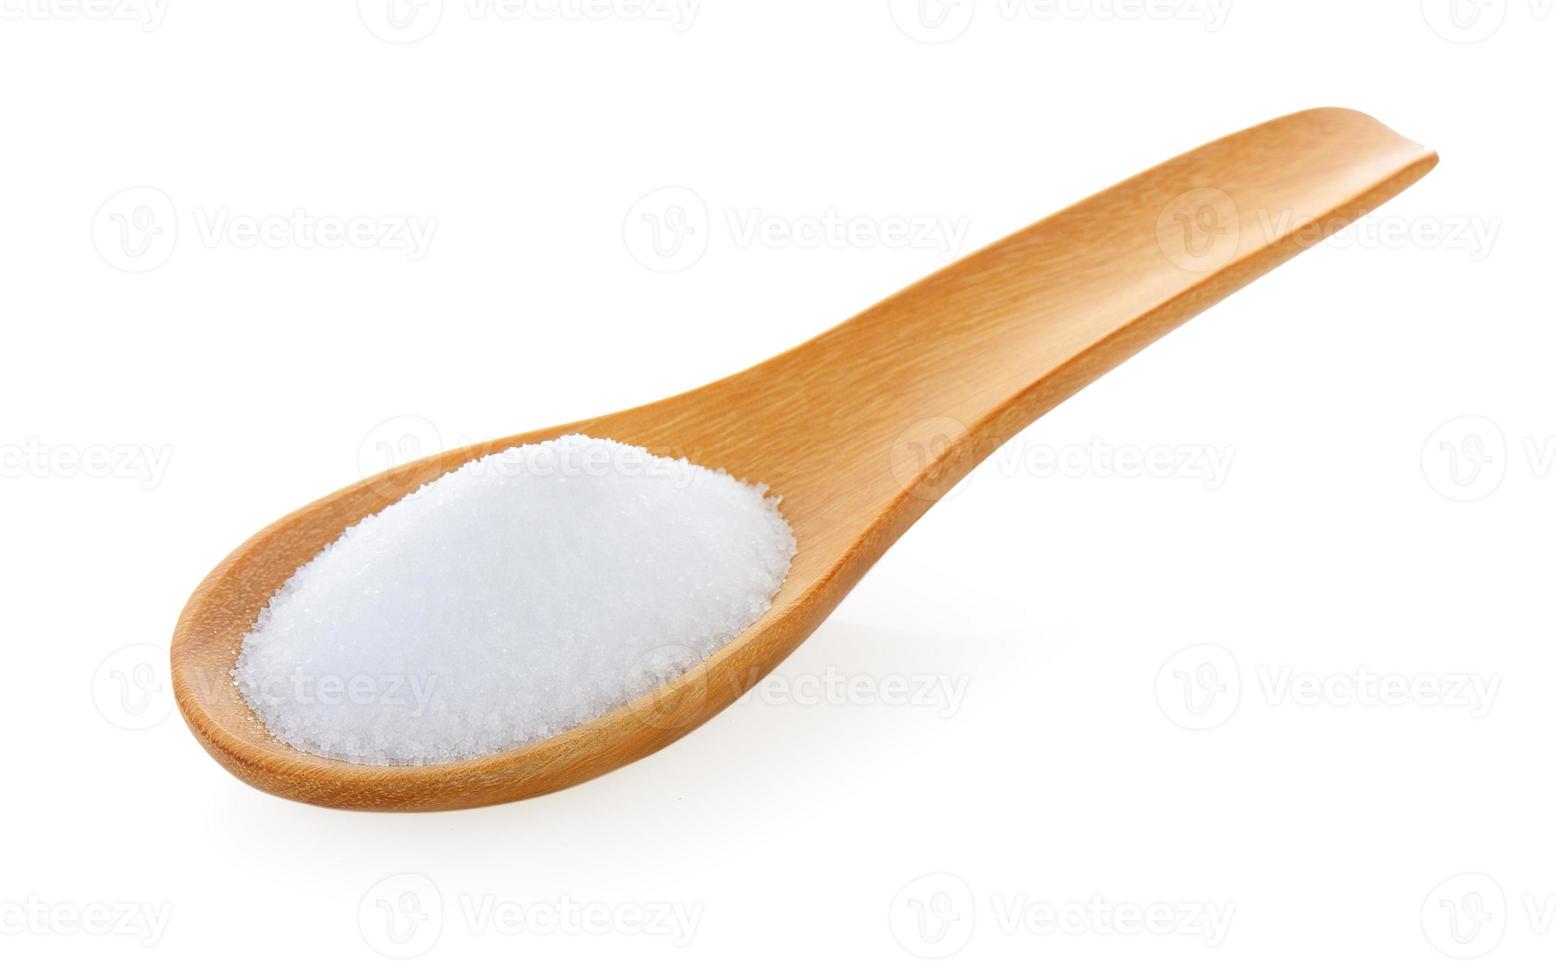 Salt in wooden spoon on white background photo